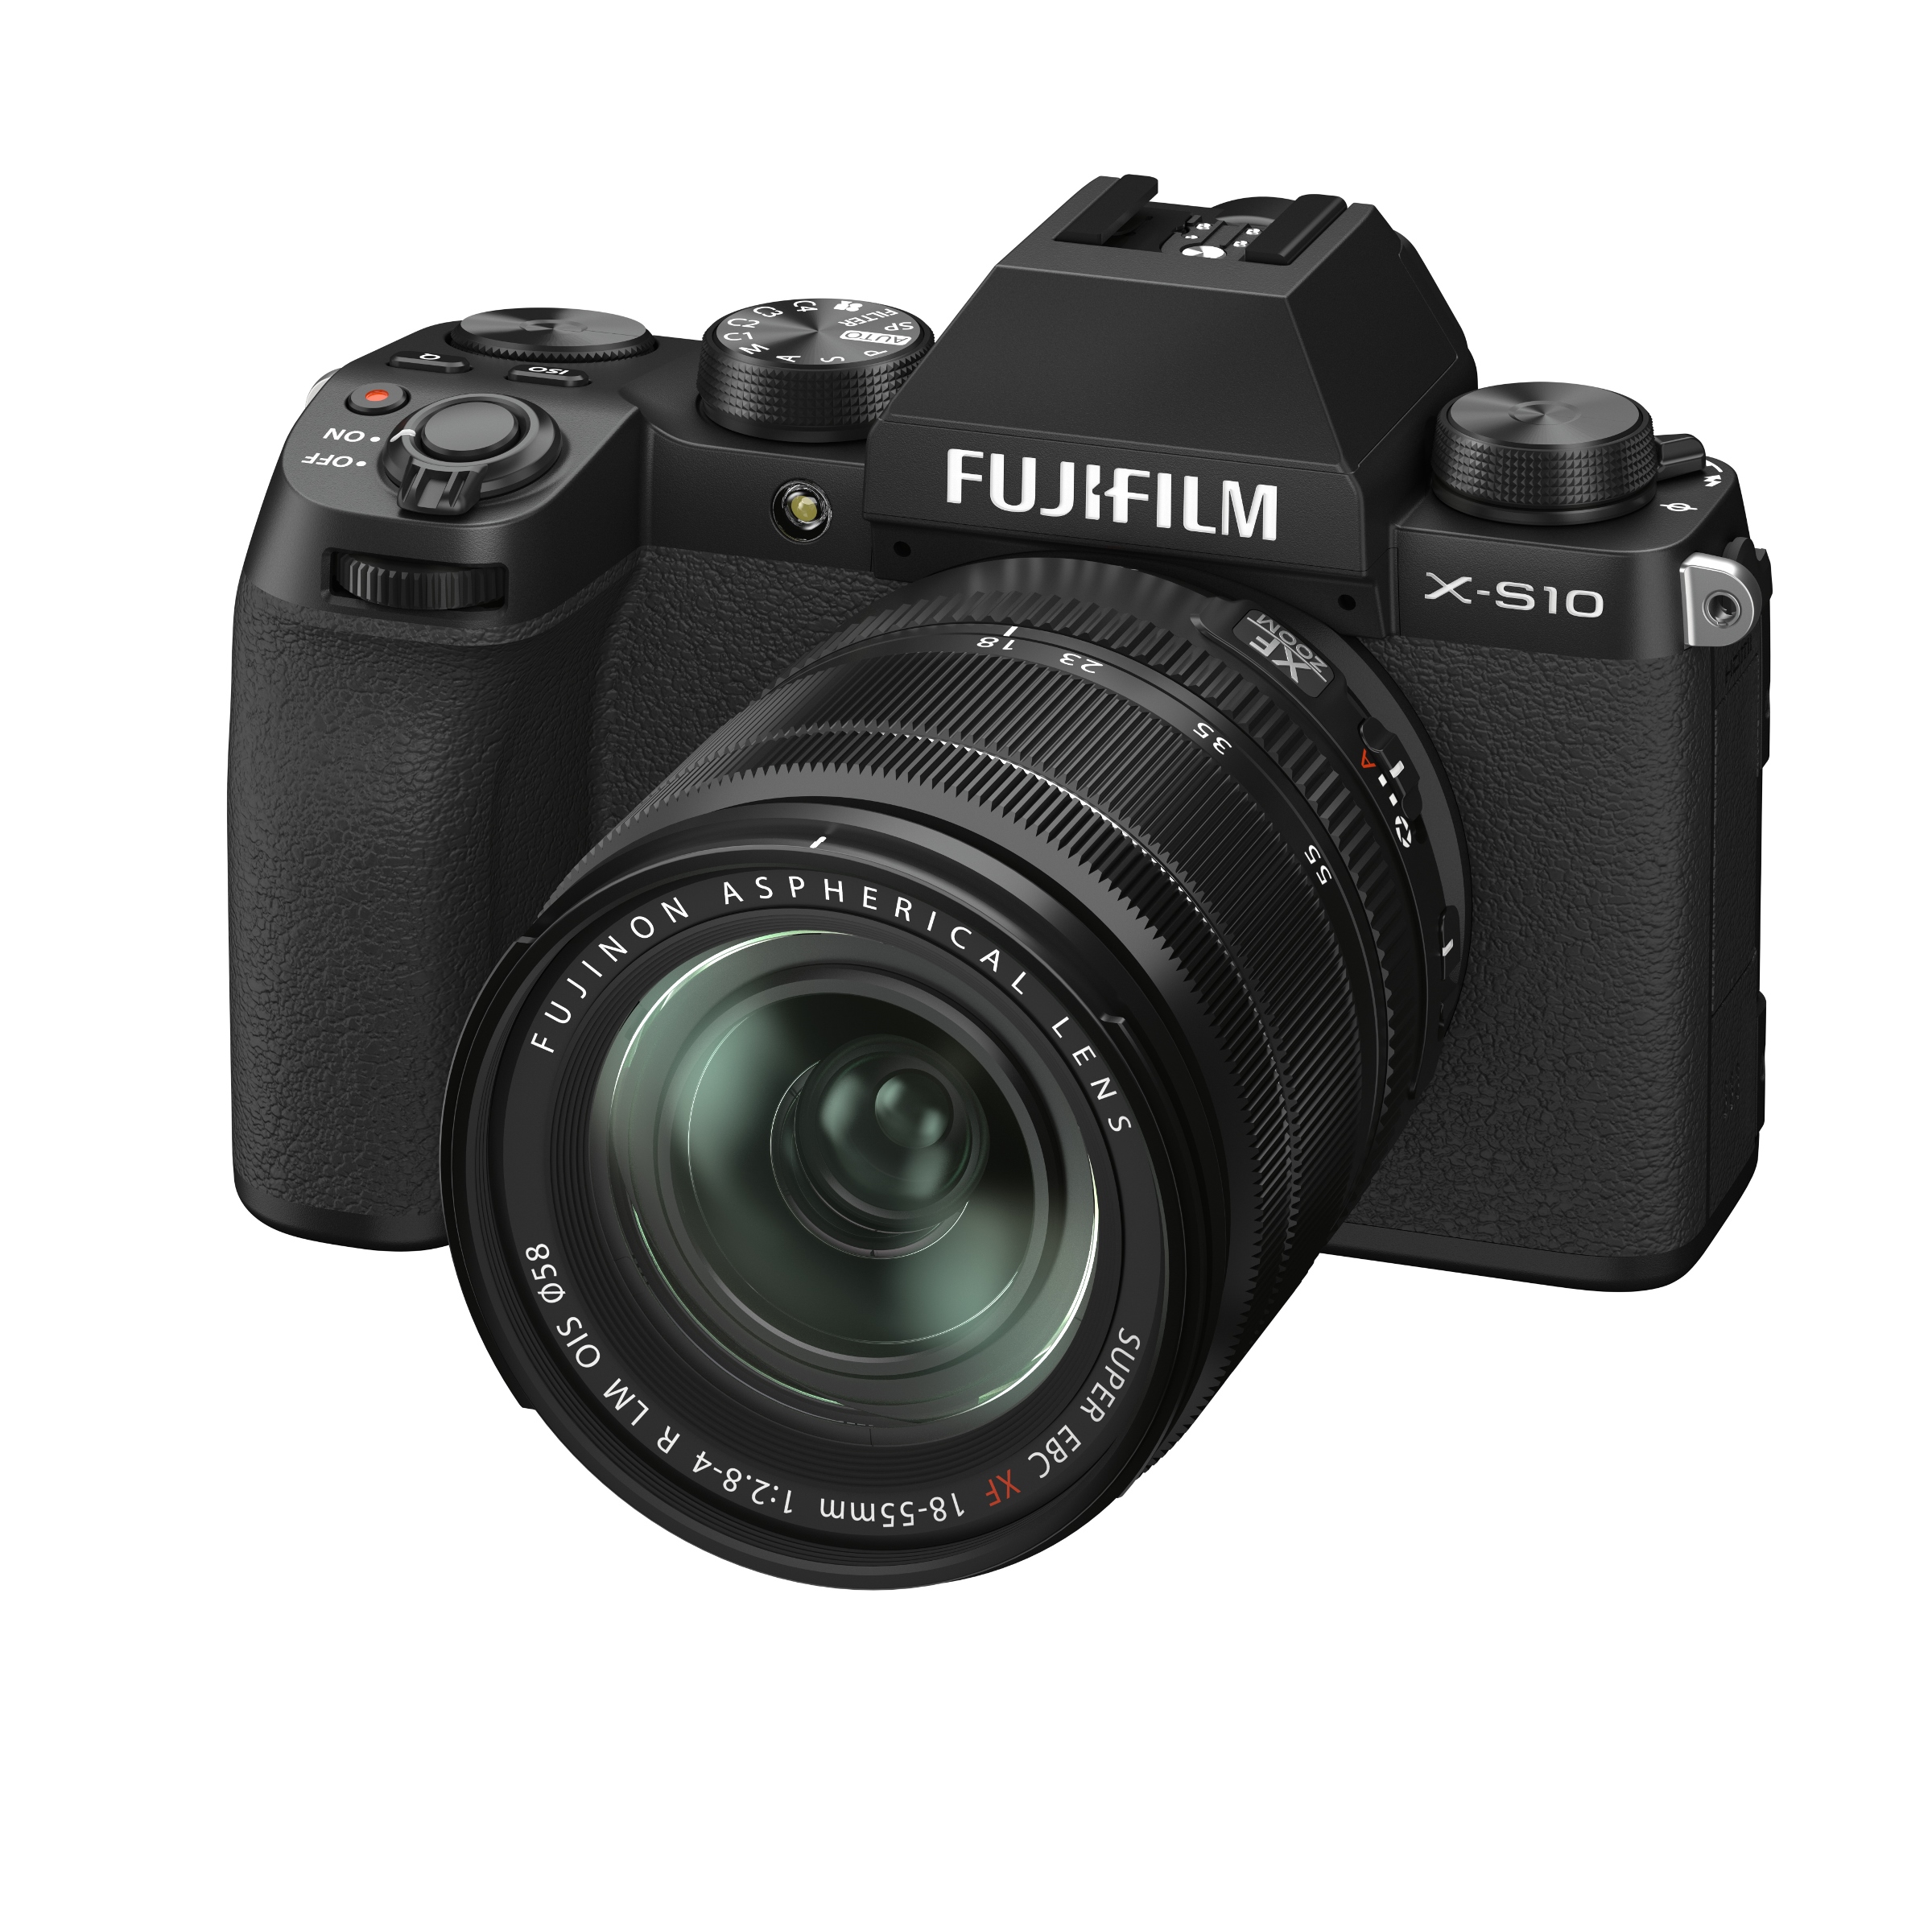 Fujifilm’den içerik üreticilere özel bir kamera Fujifilm X-S10